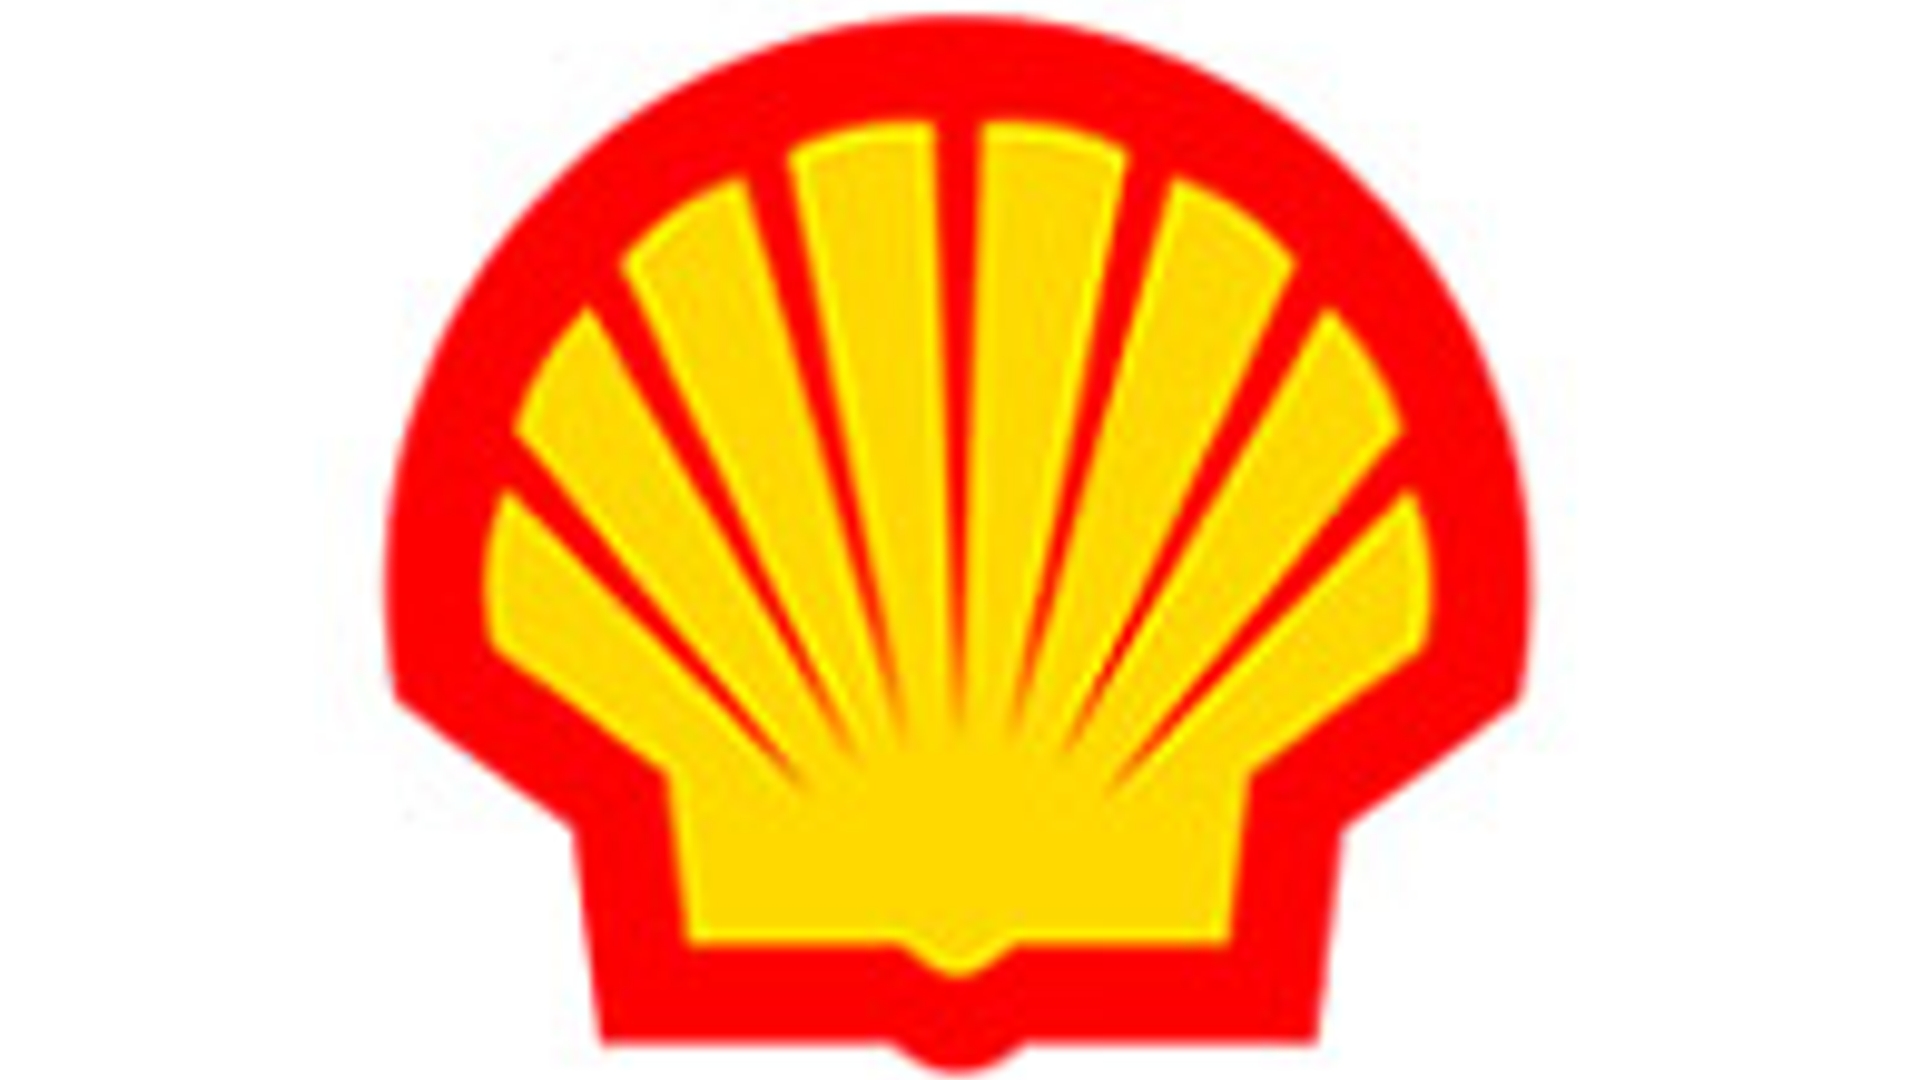 shell_logo_02.jpeg